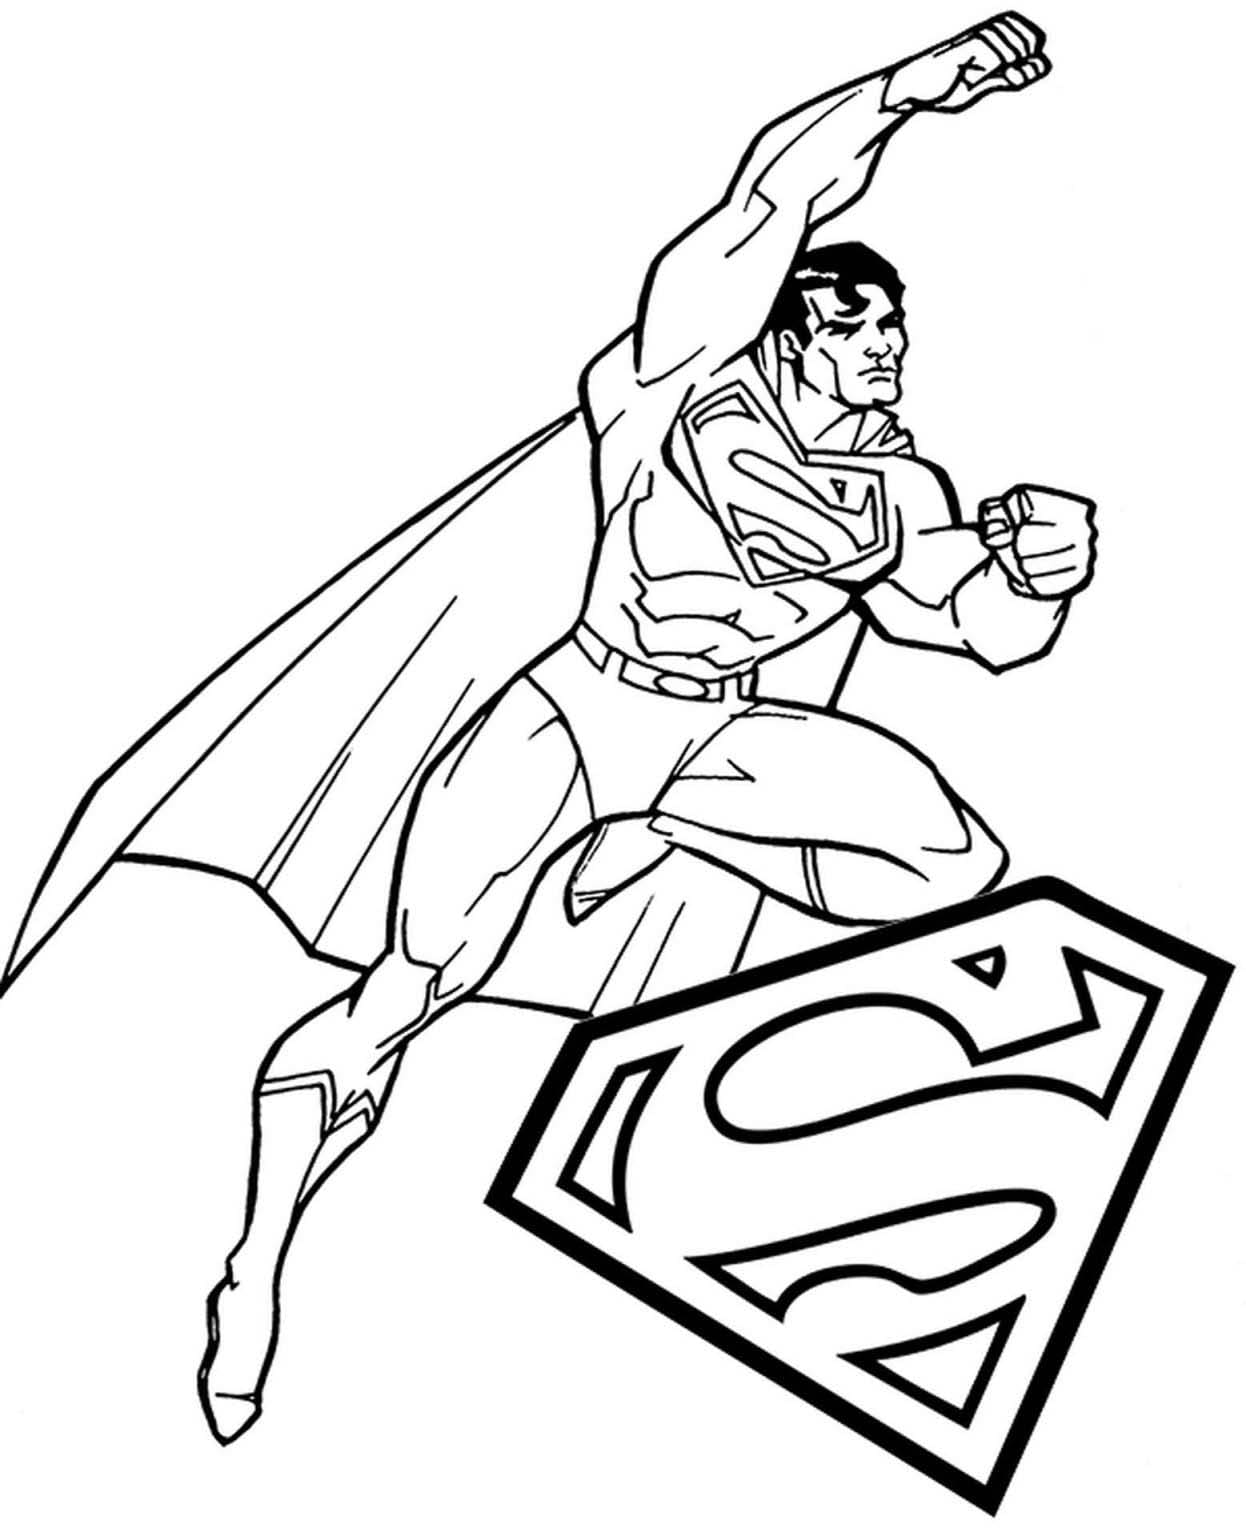 Superman Flying Image